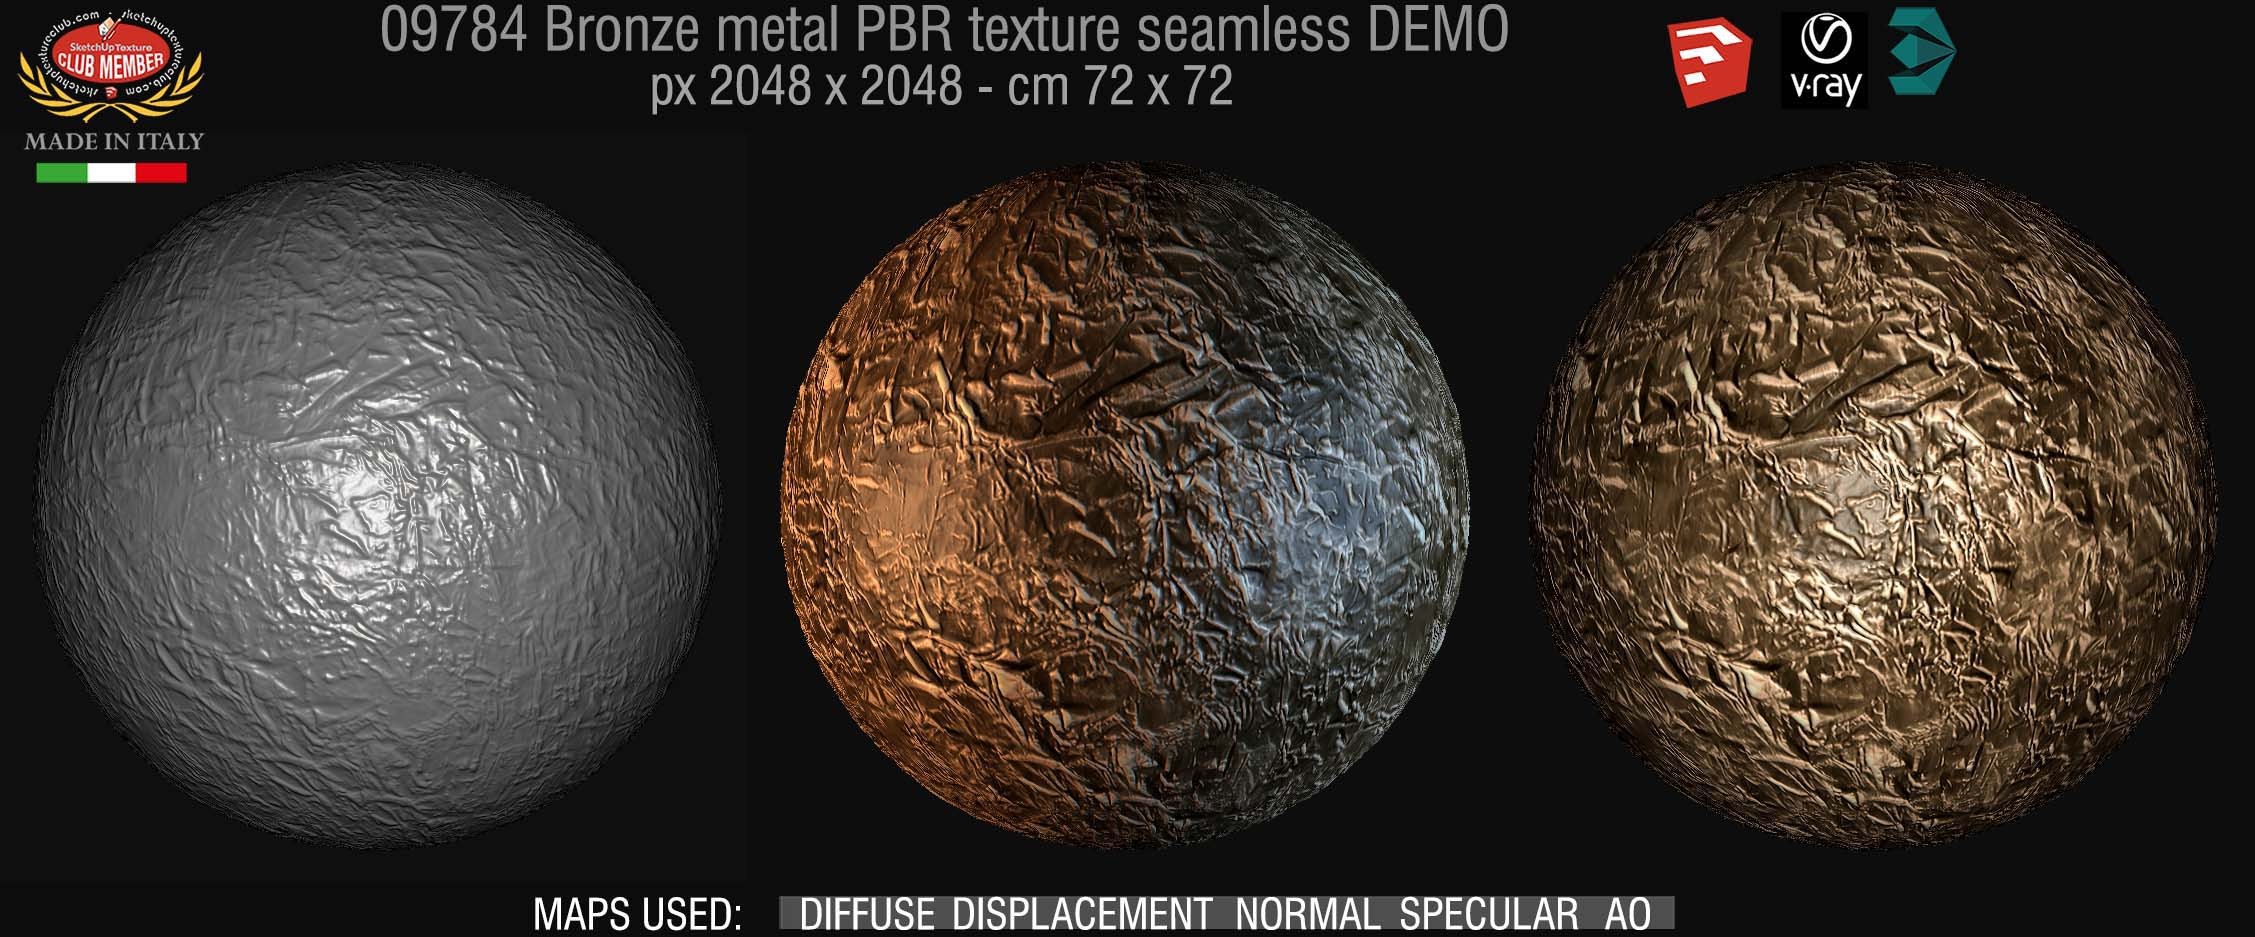 09784 Bronze metal PBR texture seamless DEMO